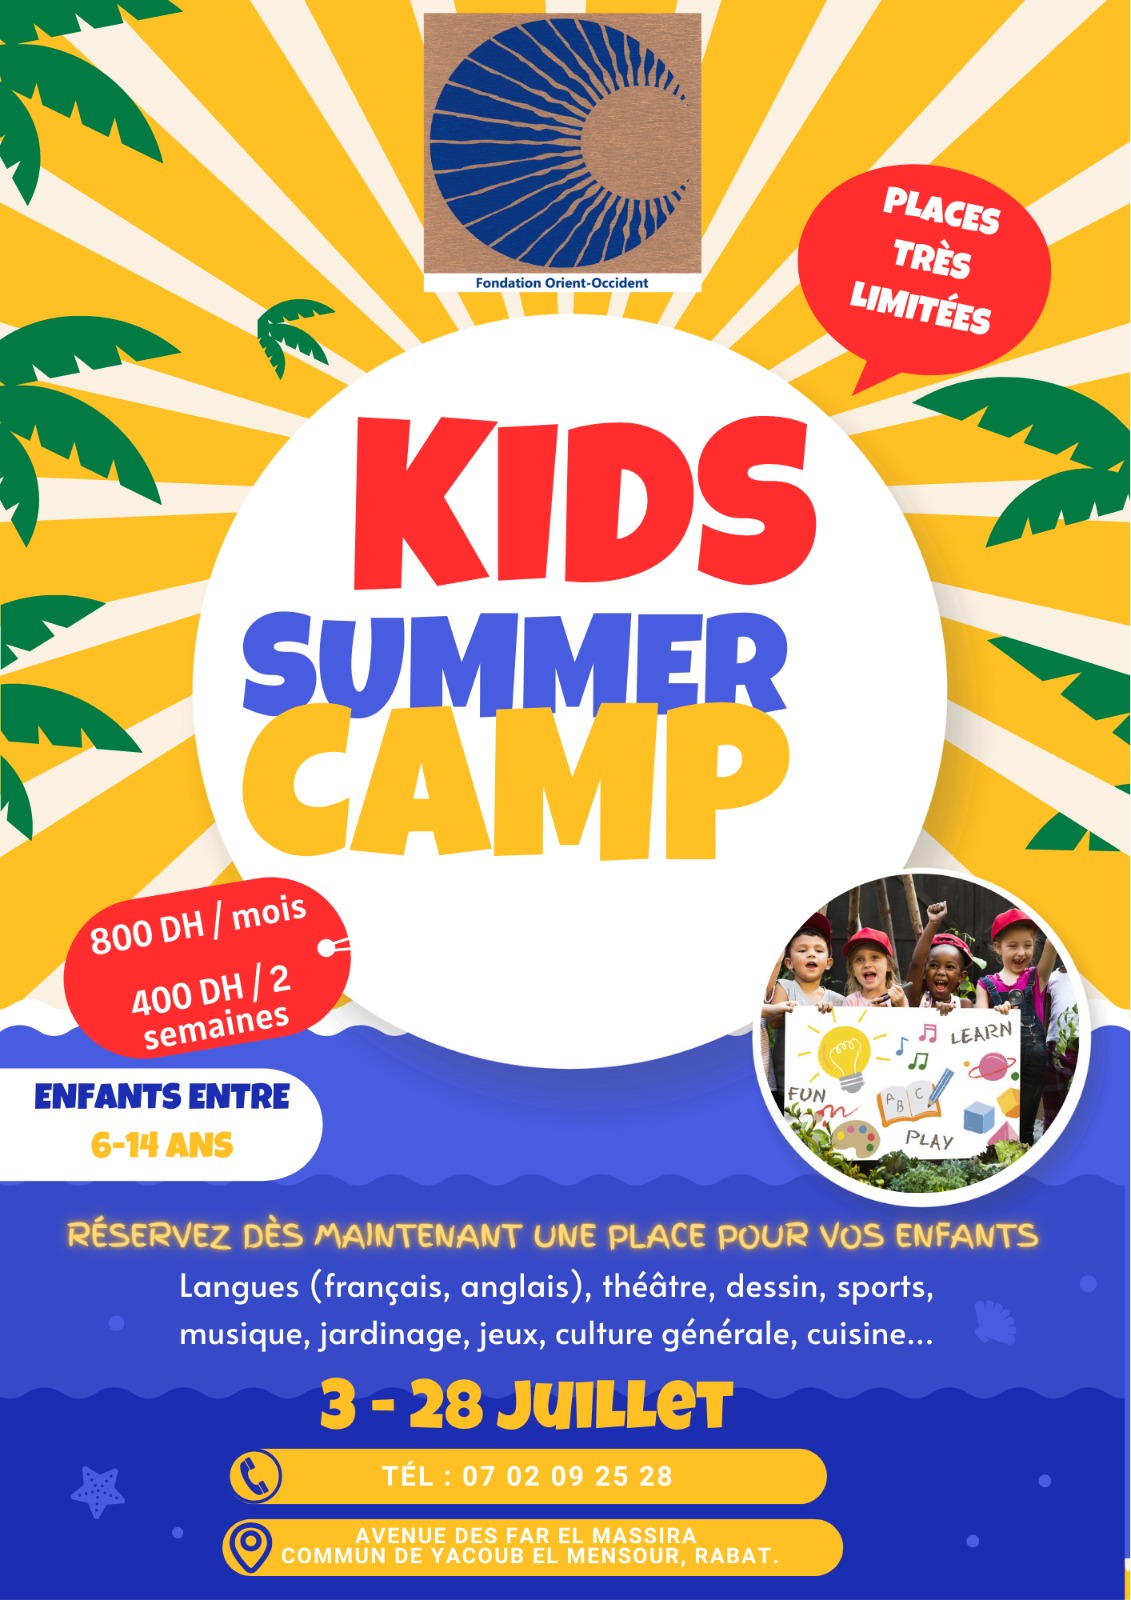 Kids Summer Camp 2023